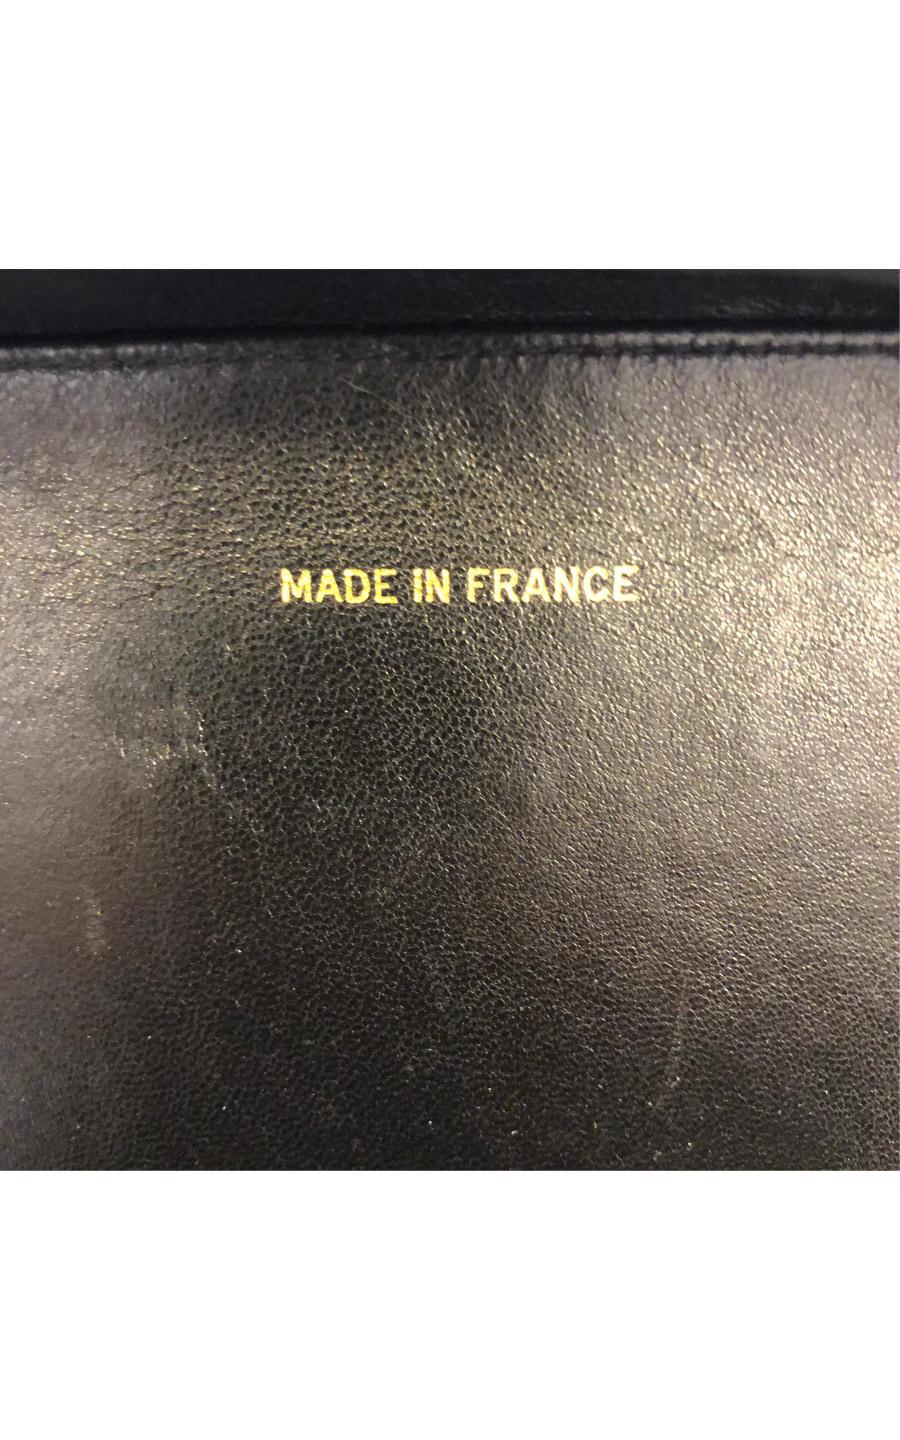 Vintage Chanel Limited Edition Crossbody bag in black Enamel leather For Sale 6